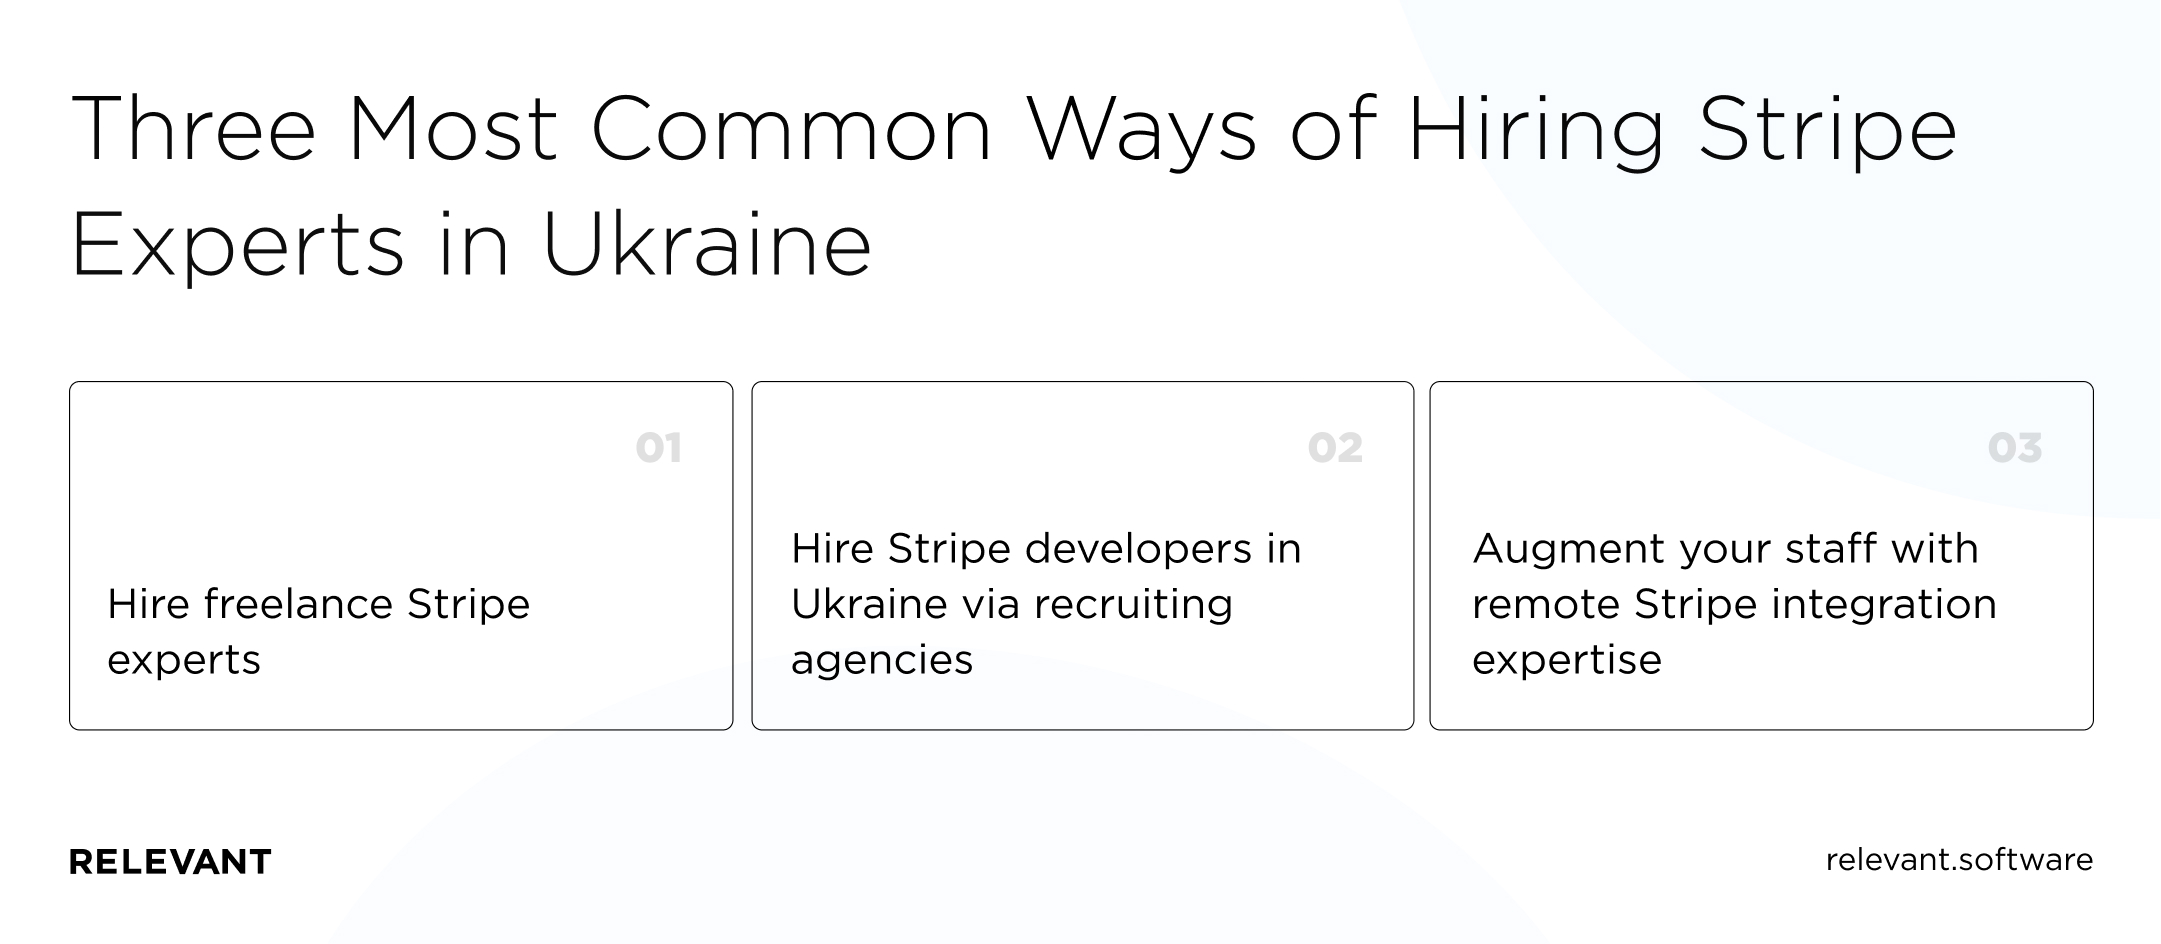 Three most common ways of hiring Stripe experts in Ukraine